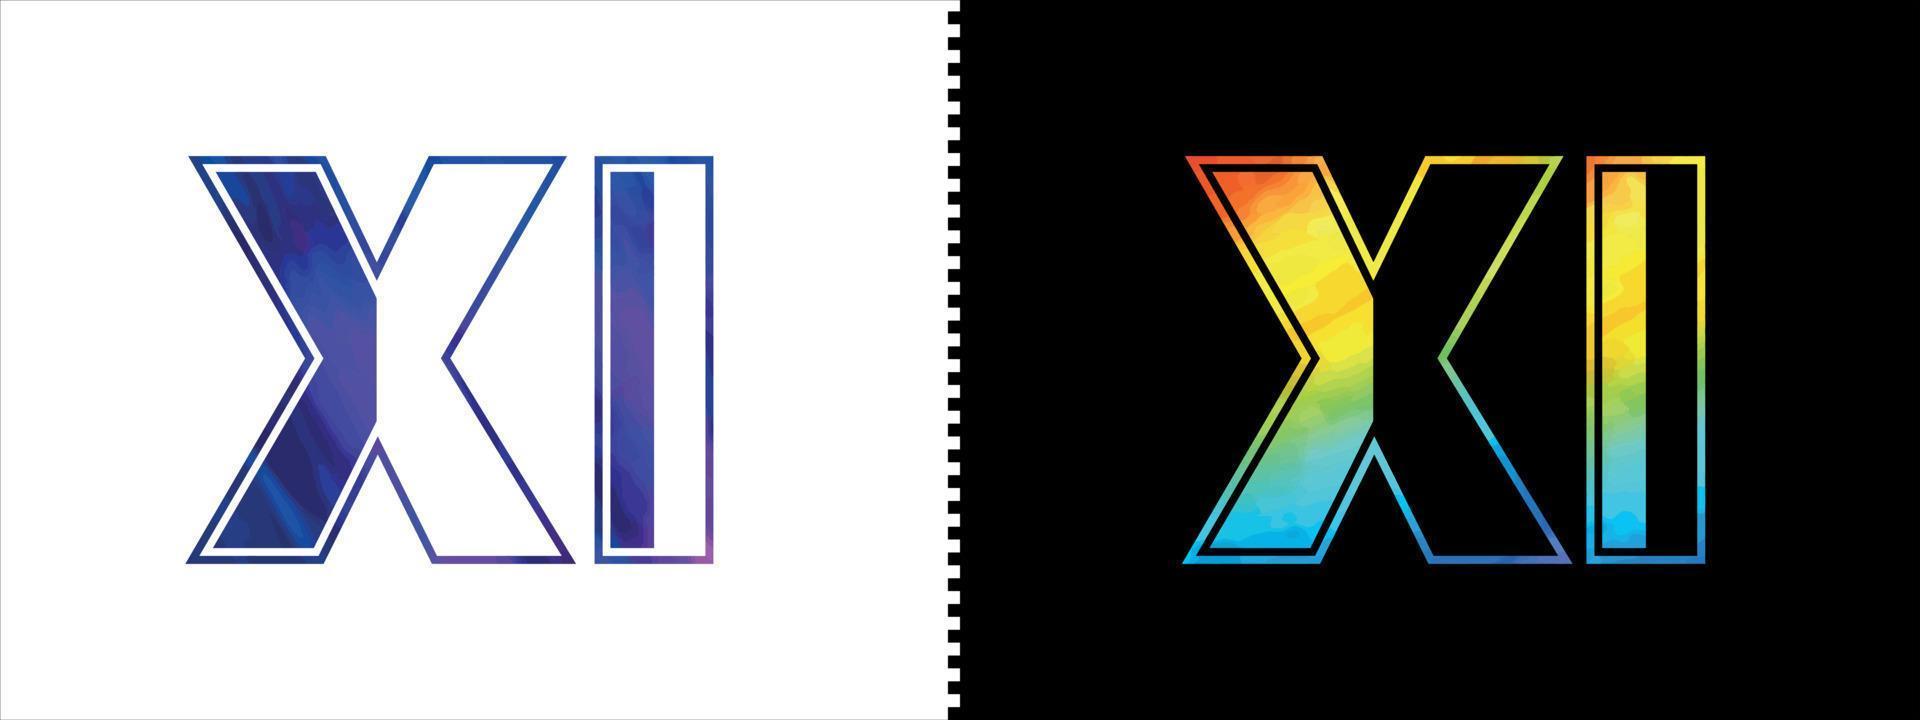 Unique XI letter logo Icon vector template. Premium stylish alphabet logo design for corporate business